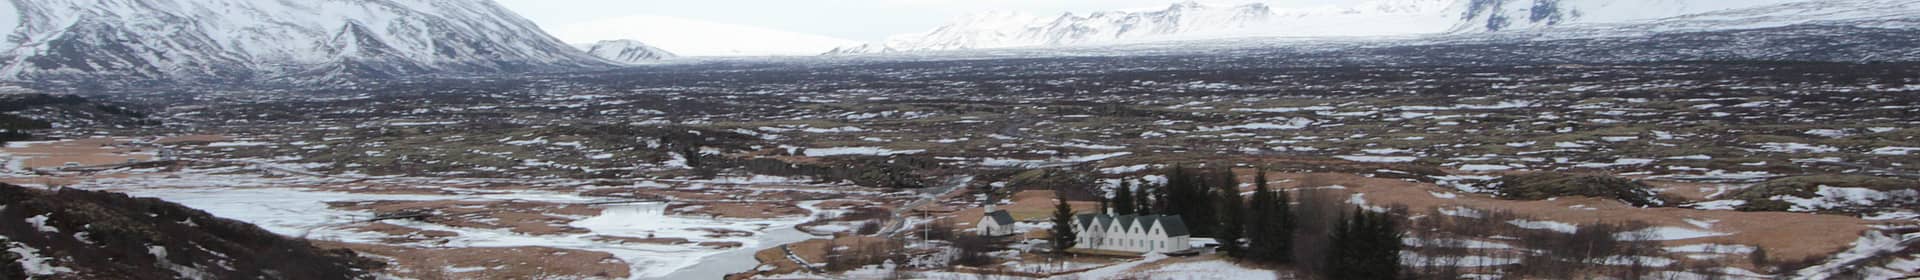 Parc national de Þingvellir